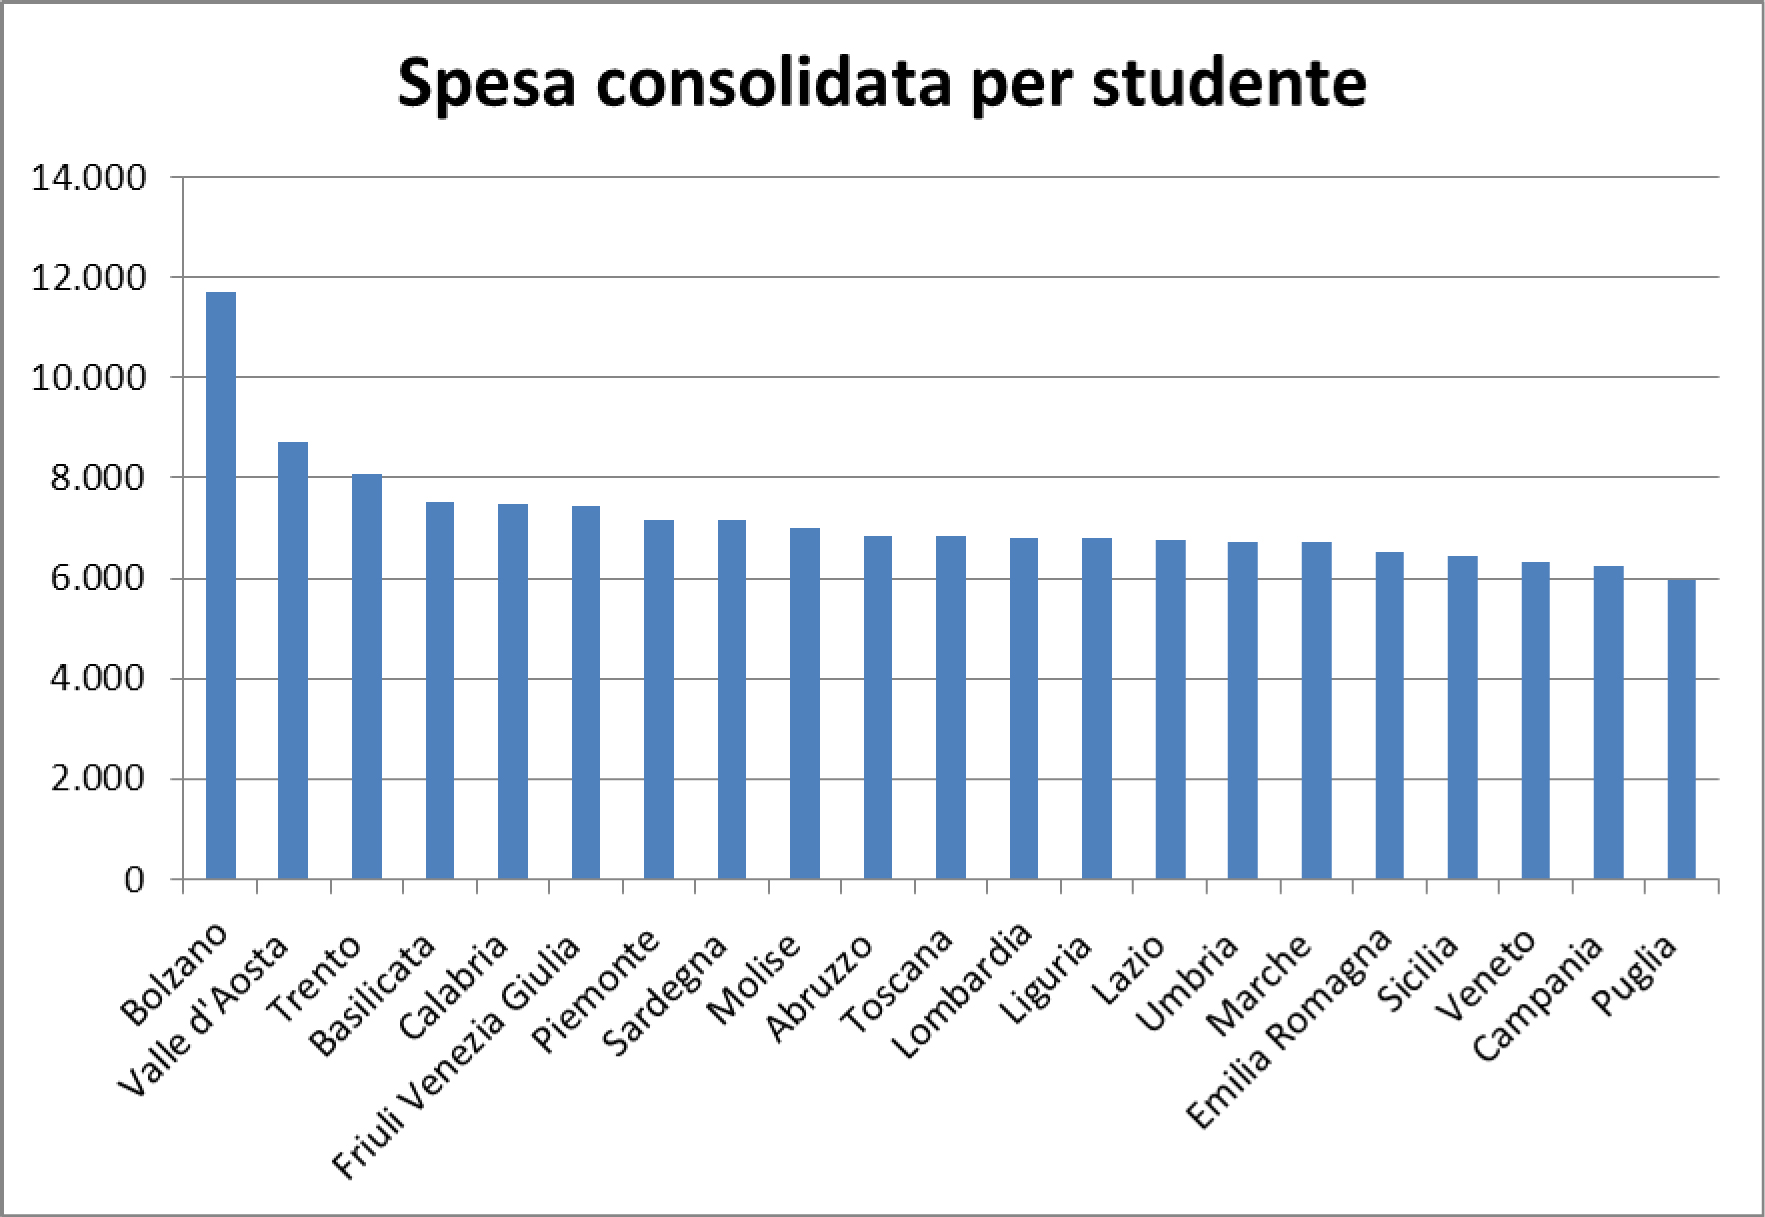 Spesa consolidata per studente , Regioni italiane